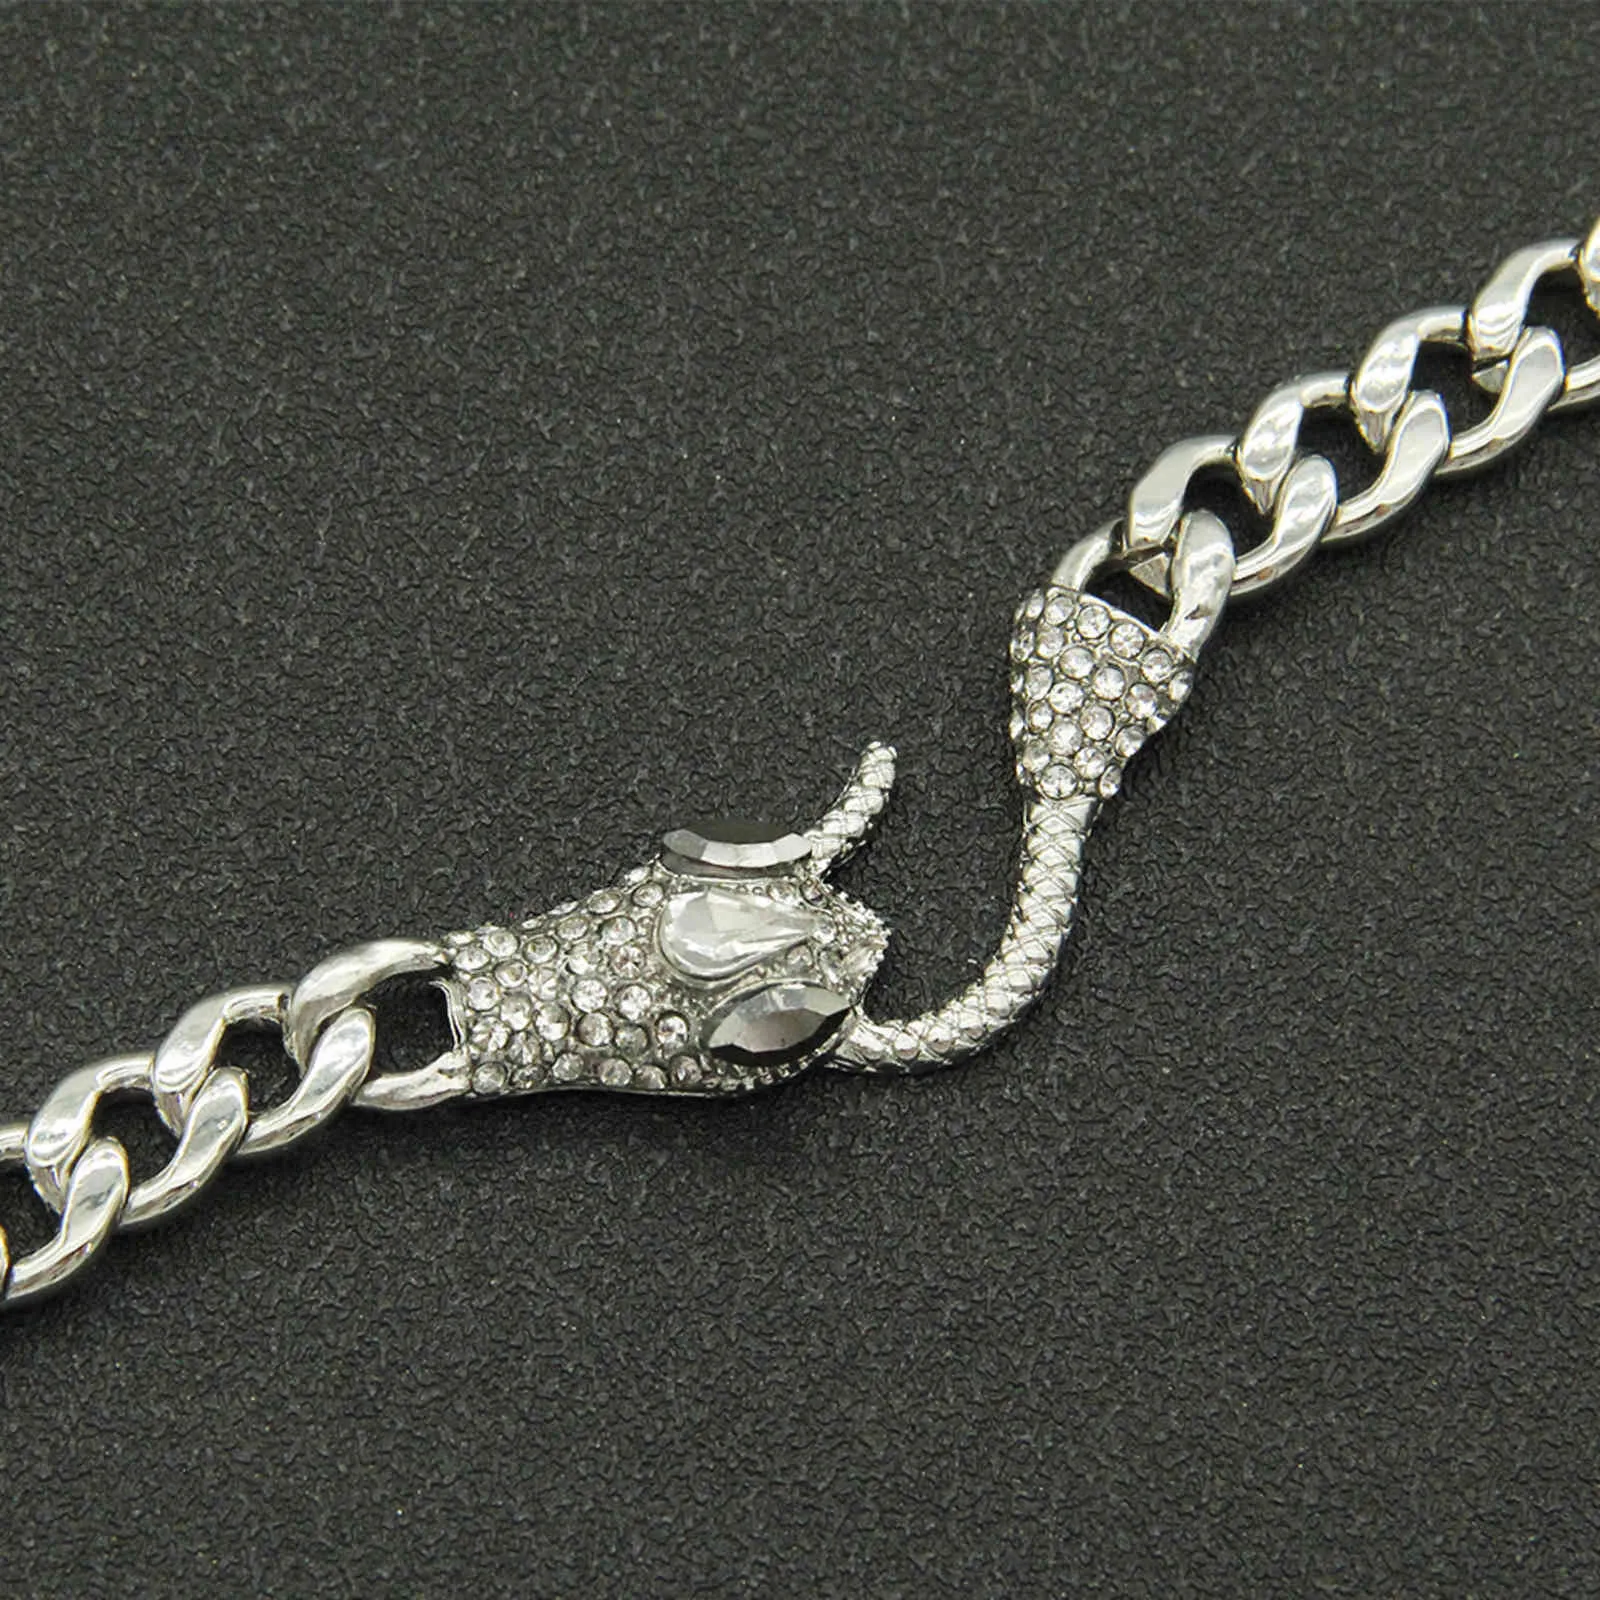 Strings ins style short cuban chain neck chain fashion design threedimensional diamond inlaid snakehead necklace jewelry